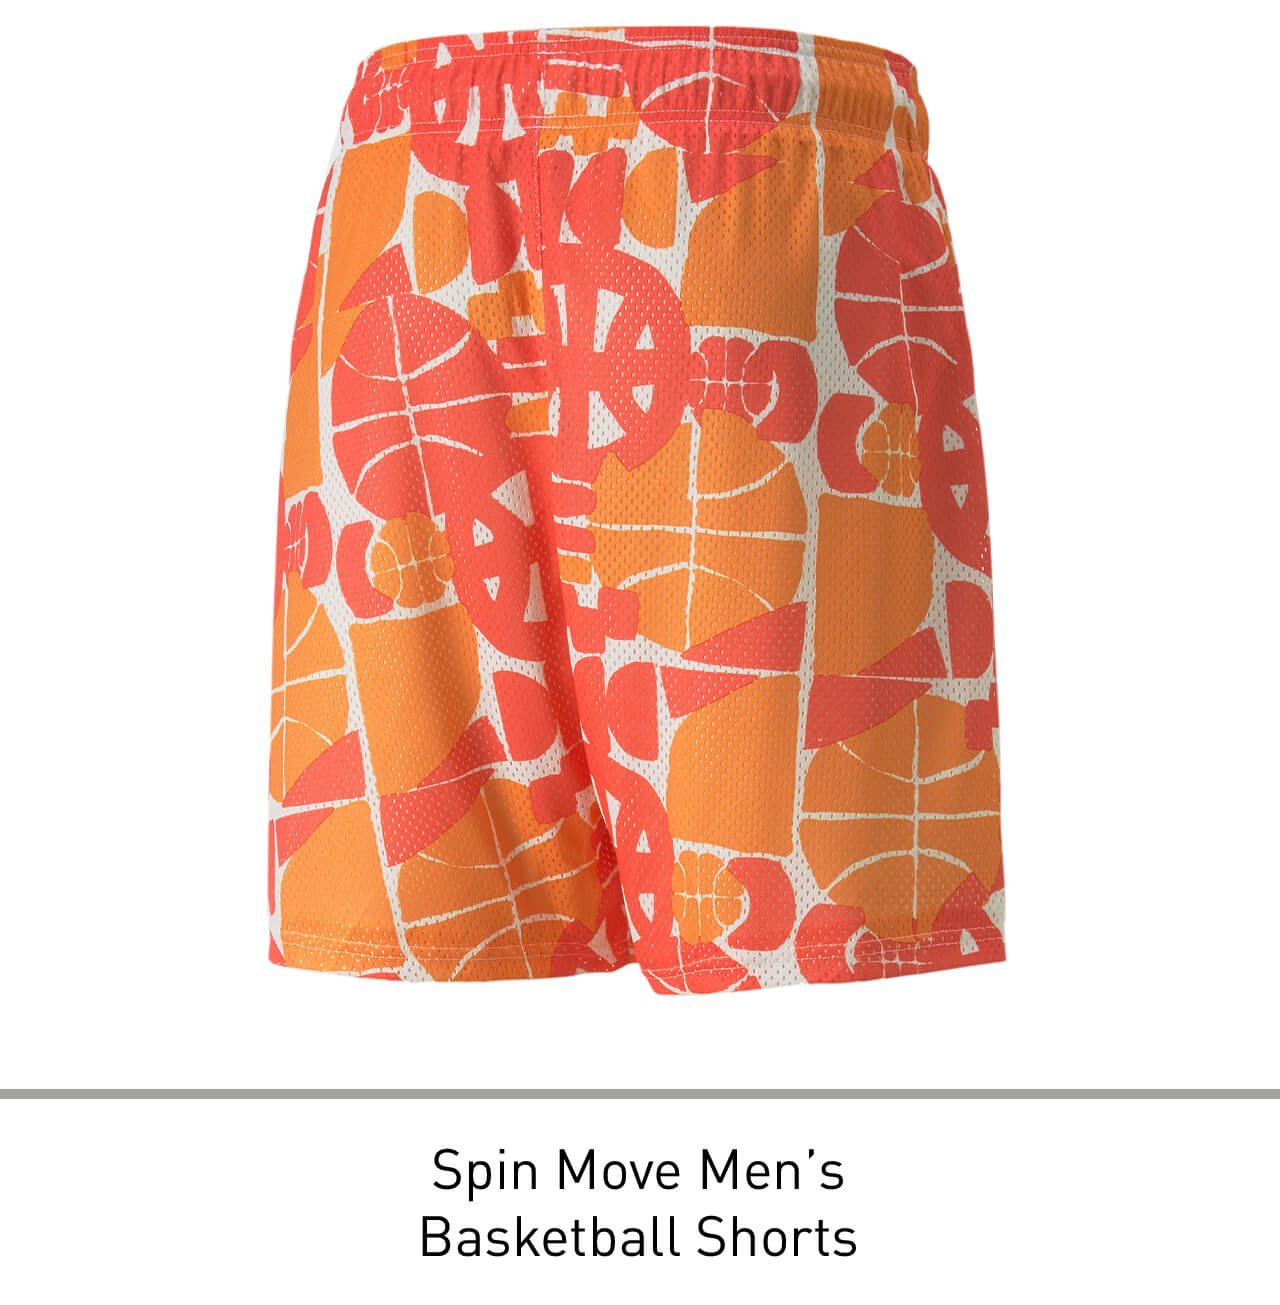 Spin Move Men’s Basketball Shorts